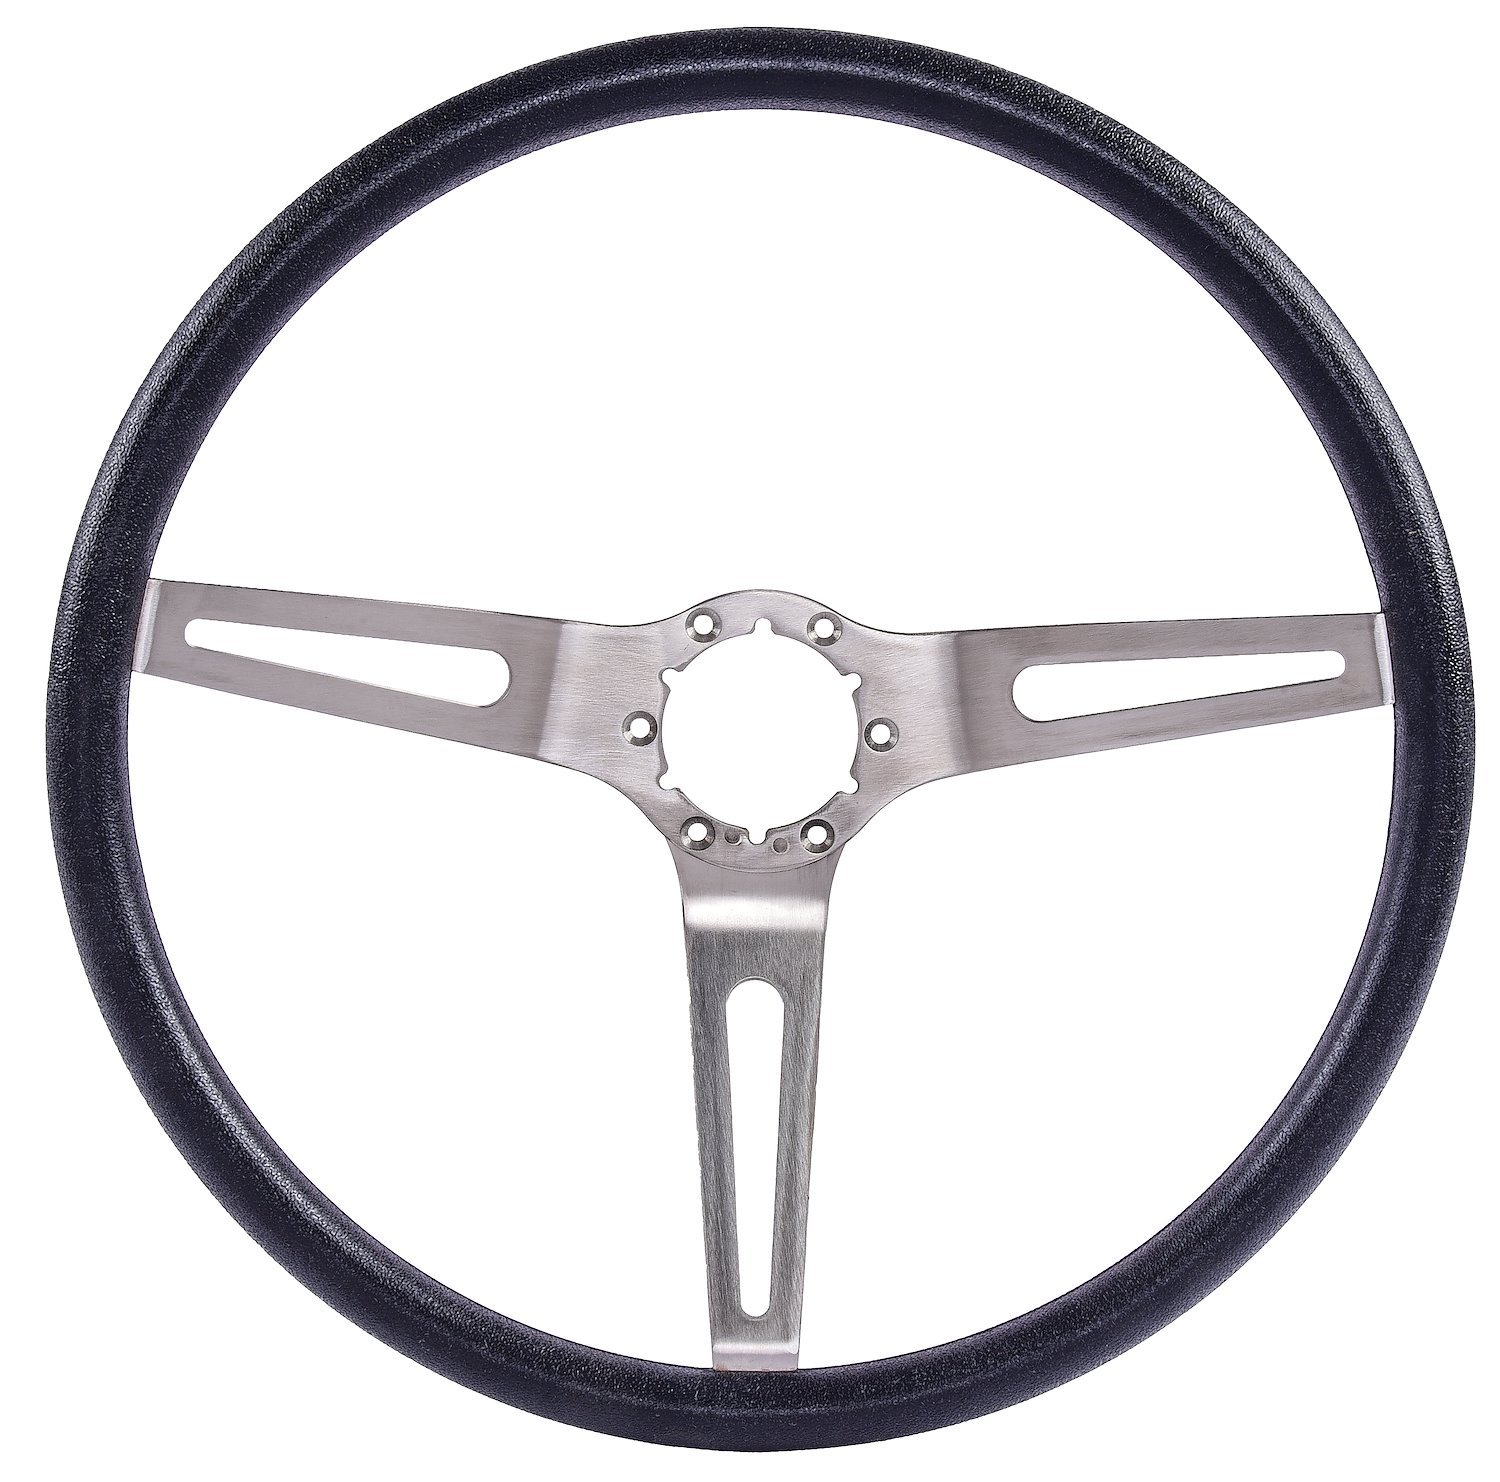 3-Spoke Comfort Grip Steering Wheel Fits Select 1969-1972 GM Cars & 1960-1975 Chevrolet & GMC Trucks [Brushed Spokes/Black Grip]